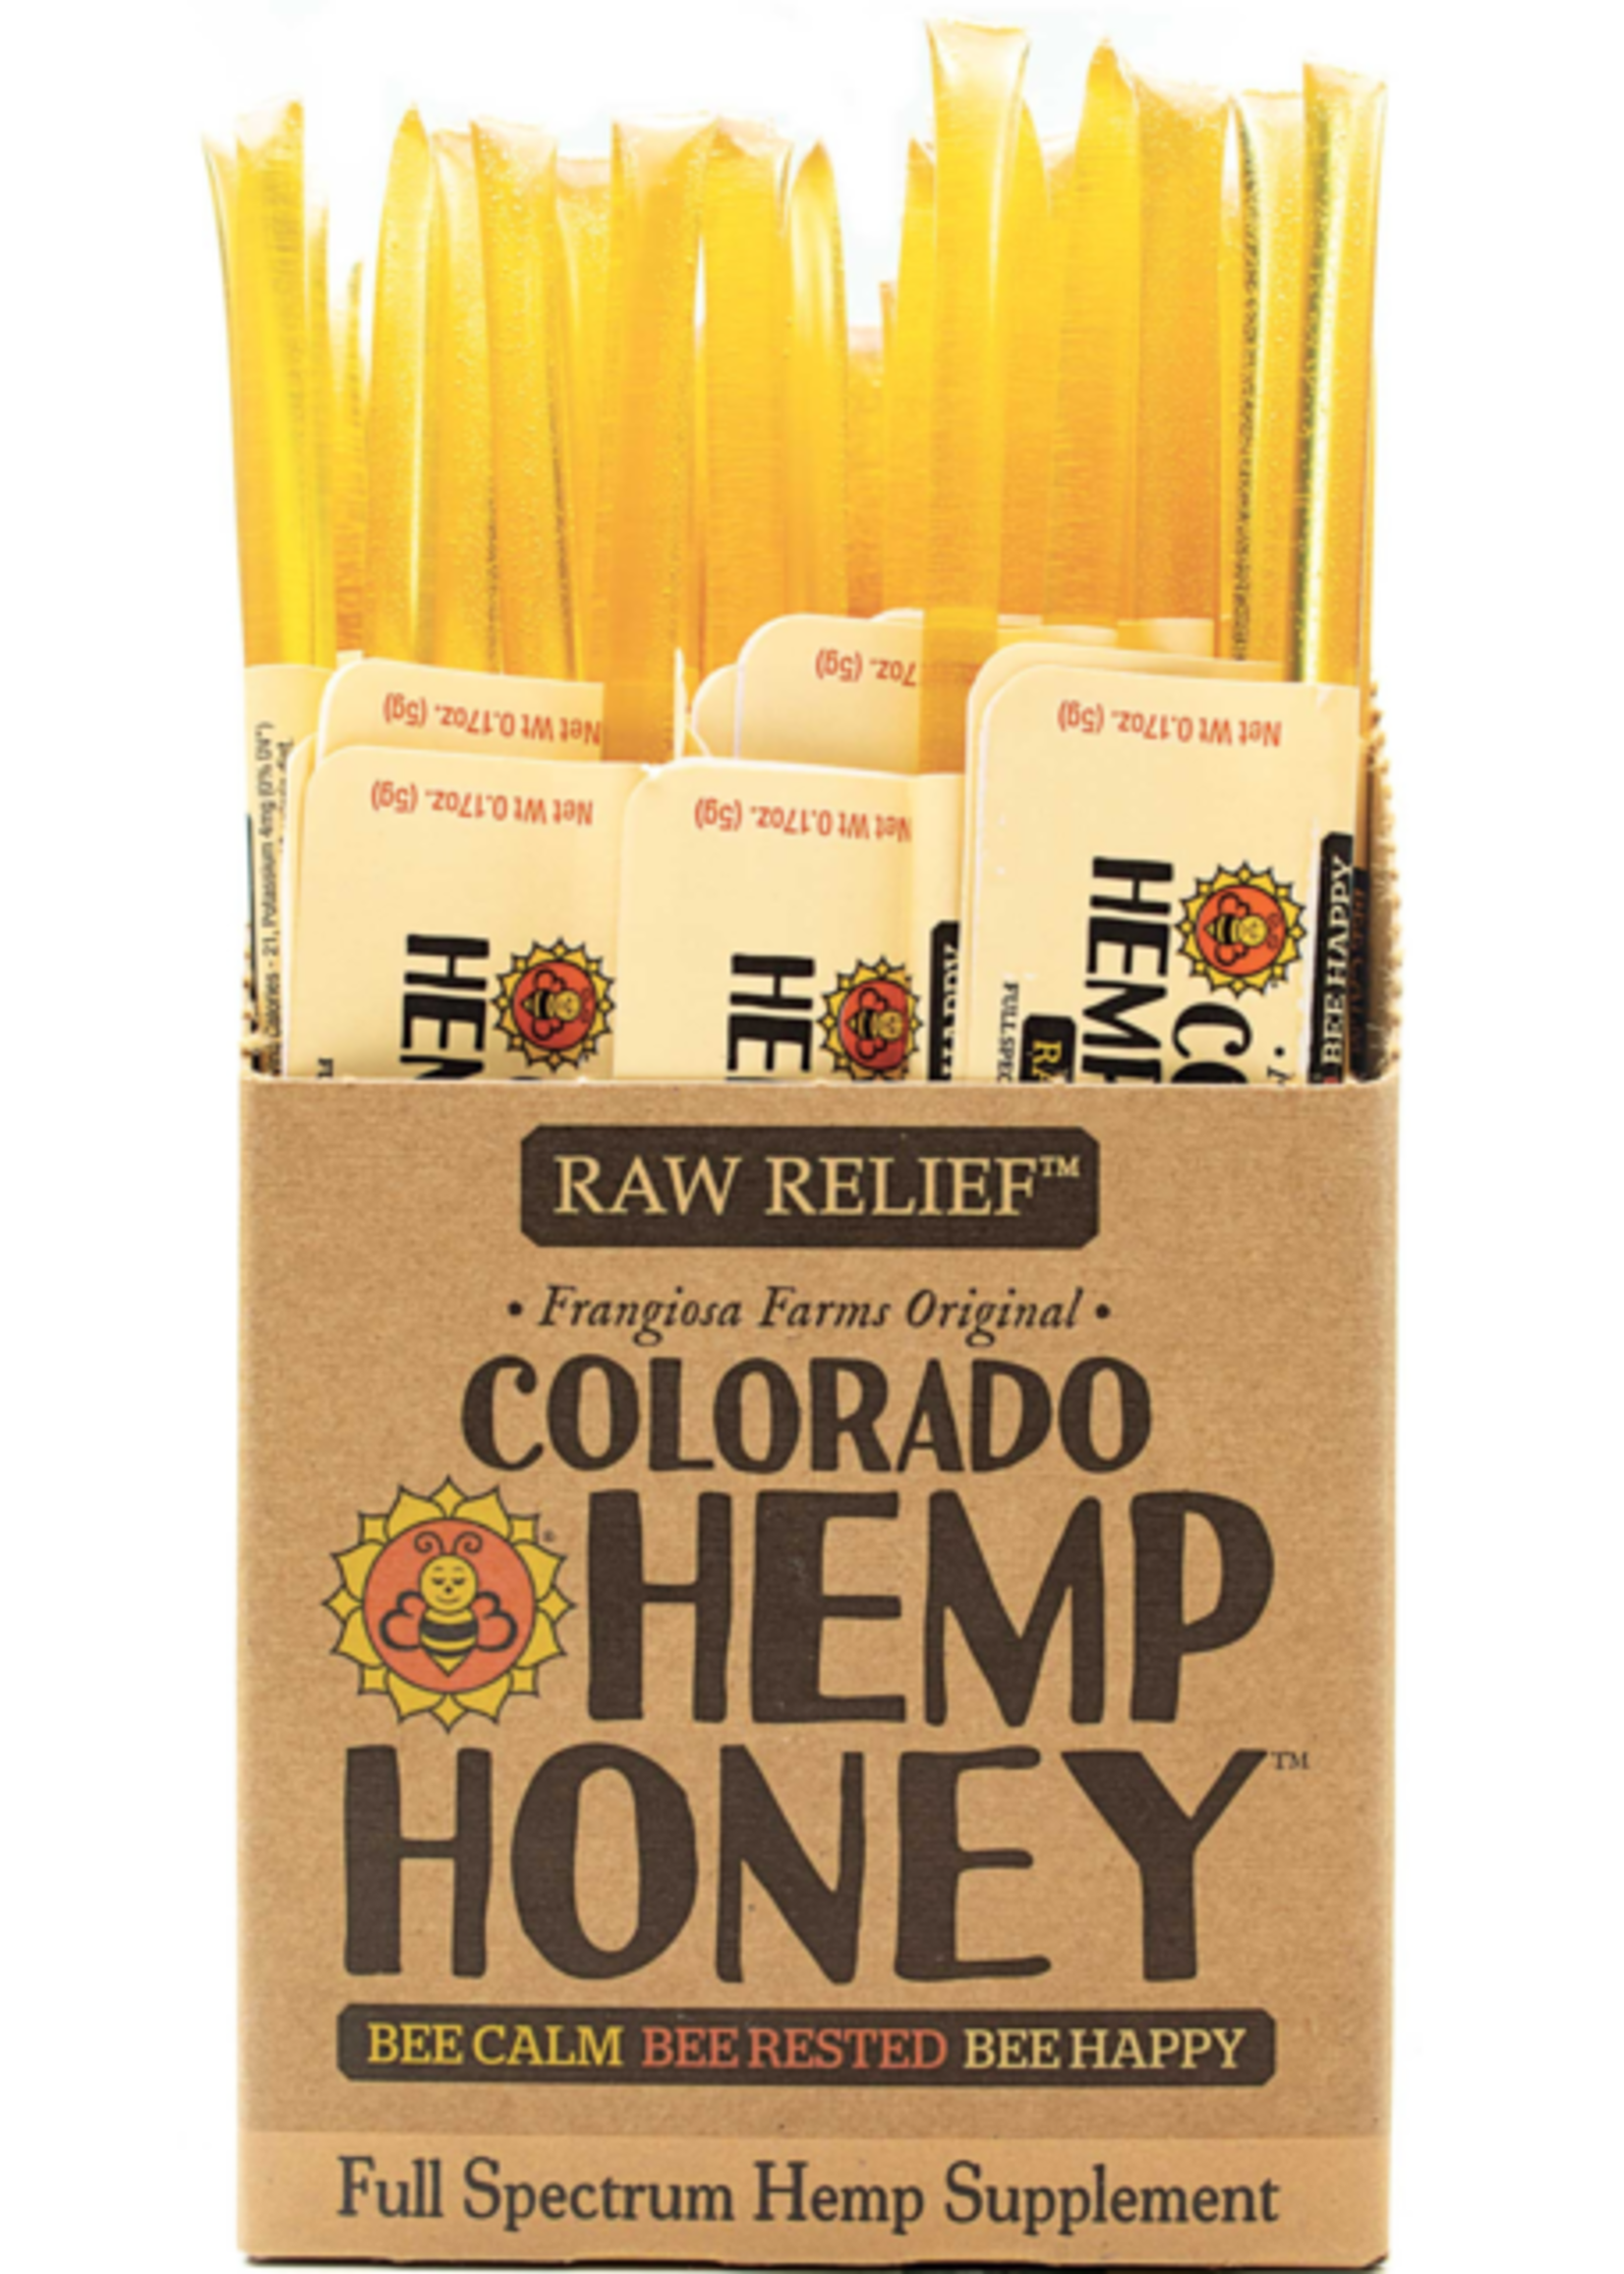 Colorado Hemp Honey Colorado Hemp Honey Raw Relief Sticks Full Spectrum Hemp Supplement